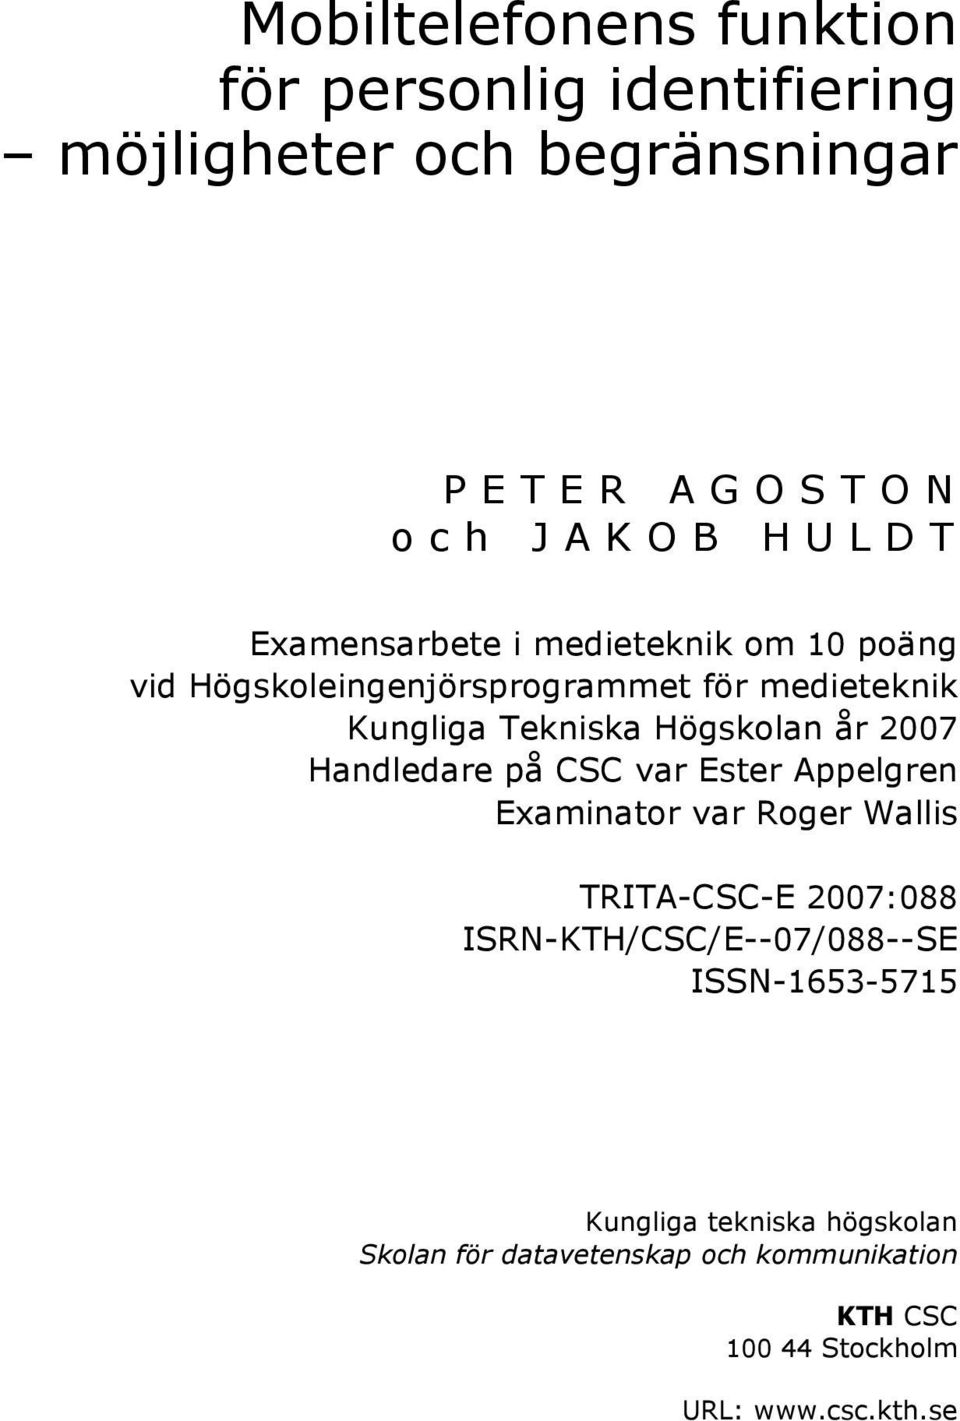 år 2007 Handledare på CSC var Ester Appelgren Examinator var Roger Wallis TRITA-CSC-E 2007:088 ISRN-KTH/CSC/E--07/088--SE